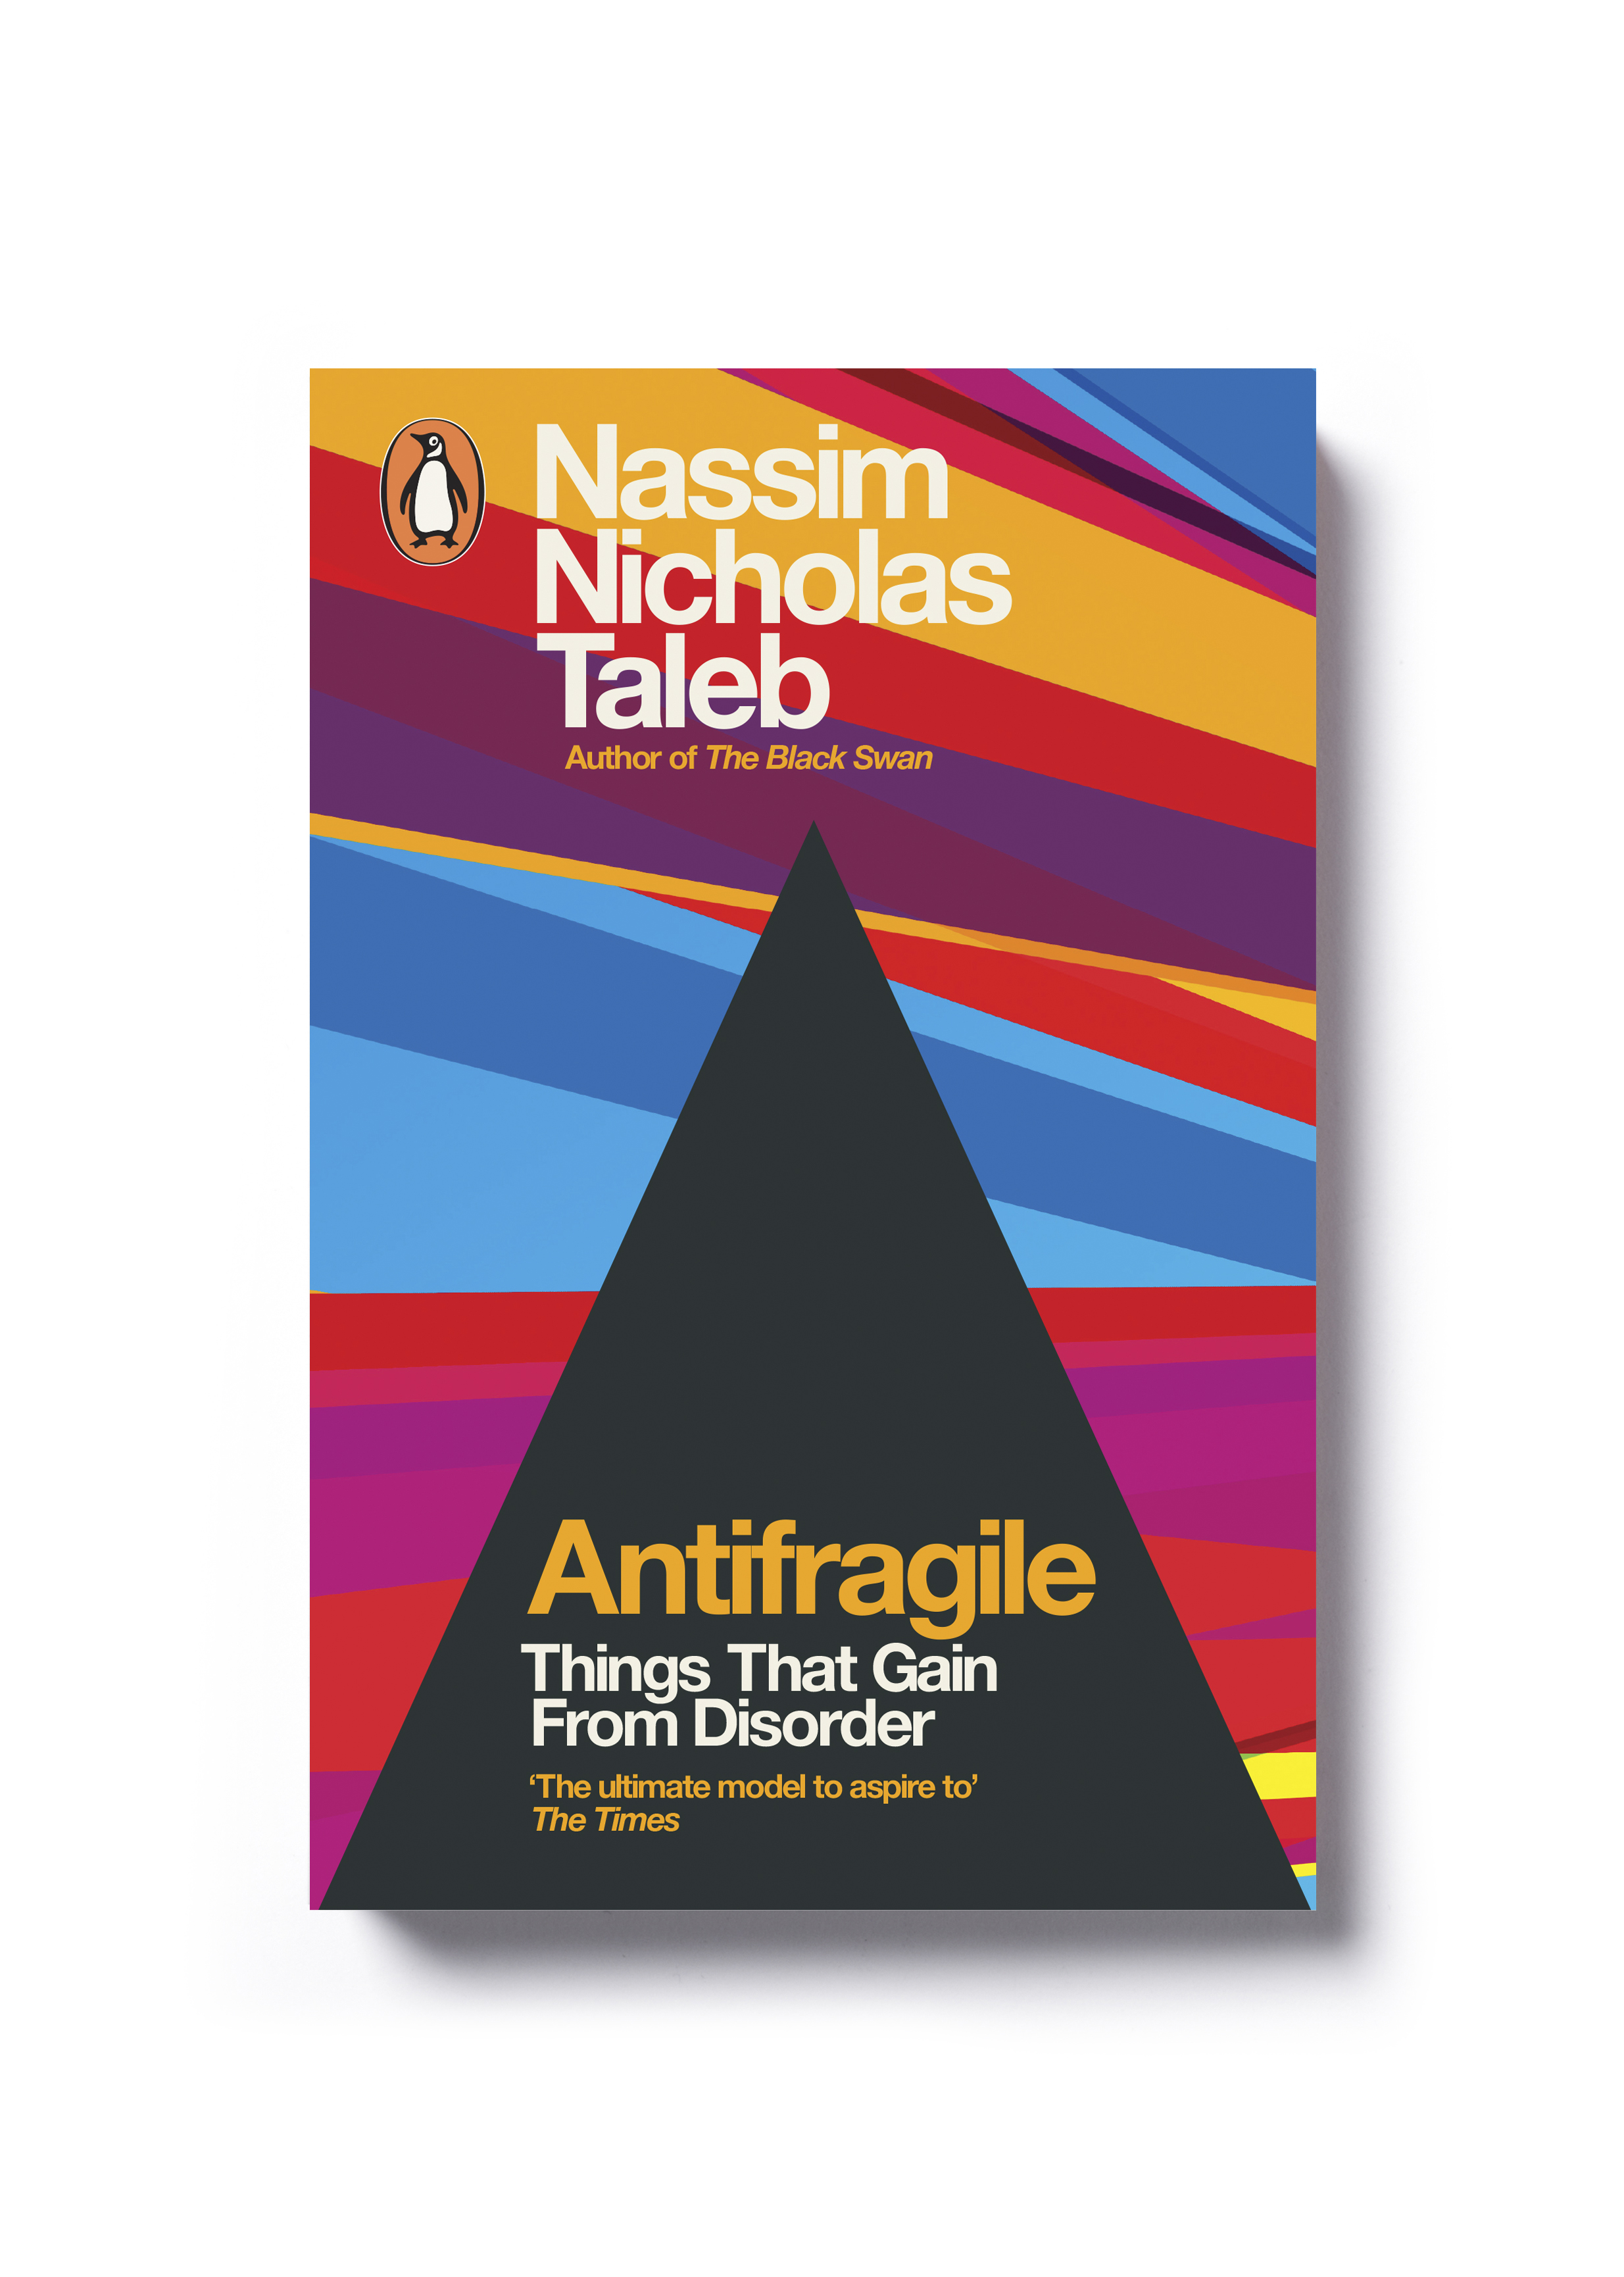  Antifragile by Nassim Nicholas Taleb (paperback) - Design: Jim Stoddart  